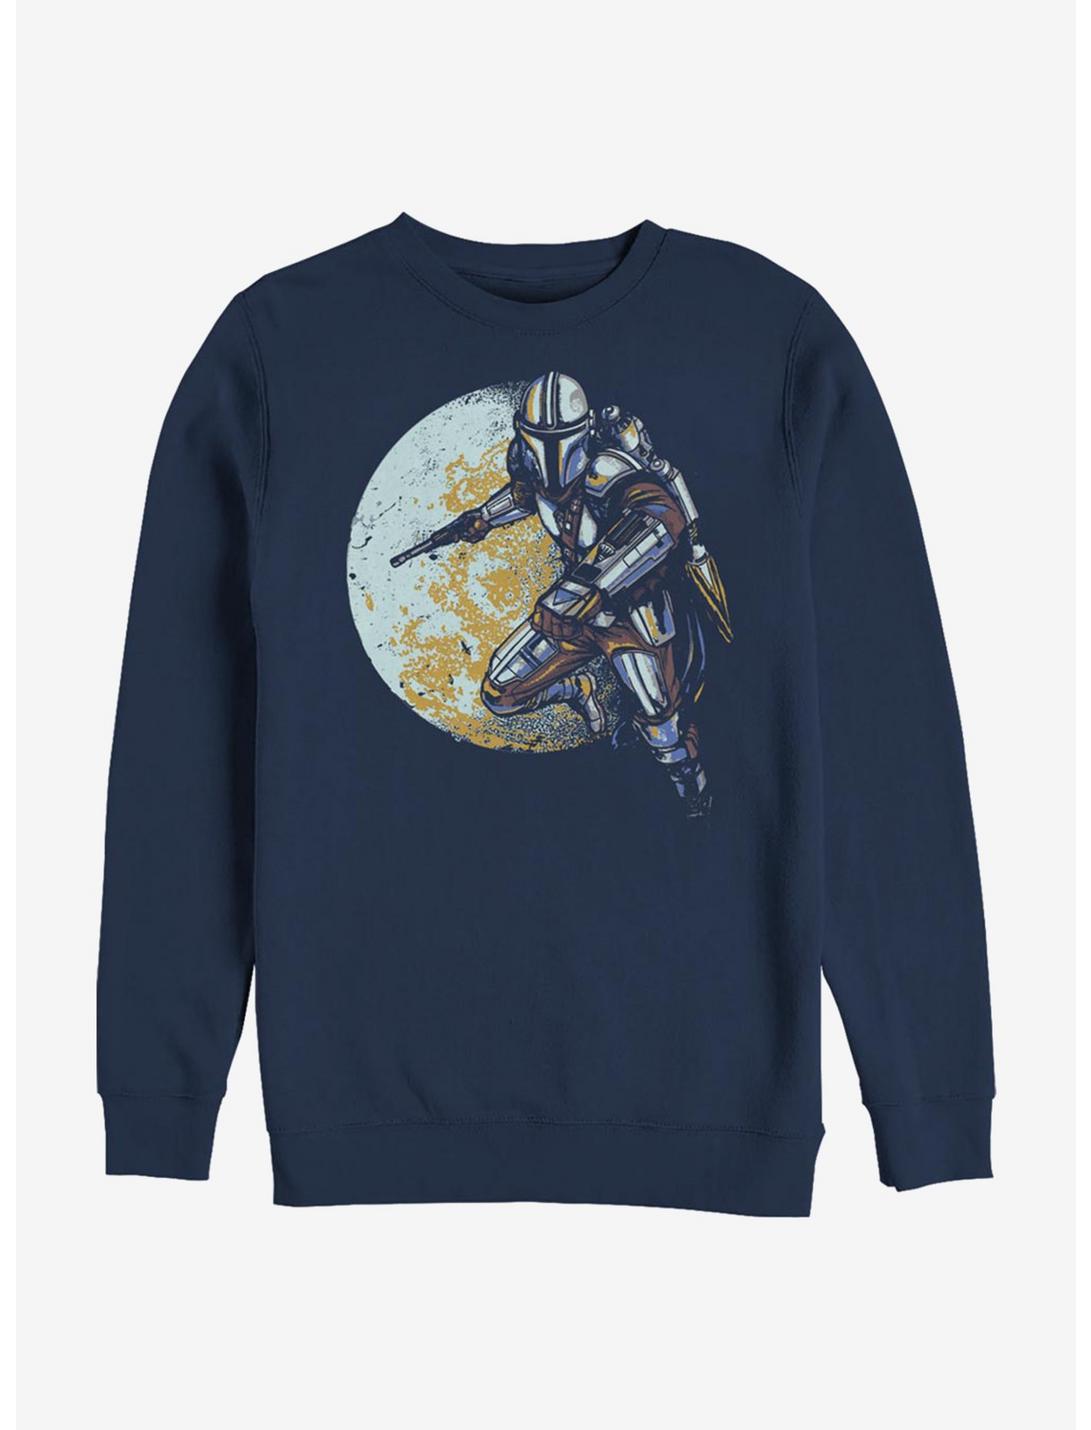 Star Wars The Mandalorian Moon-dalorian Sweatshirt, NAVY, hi-res